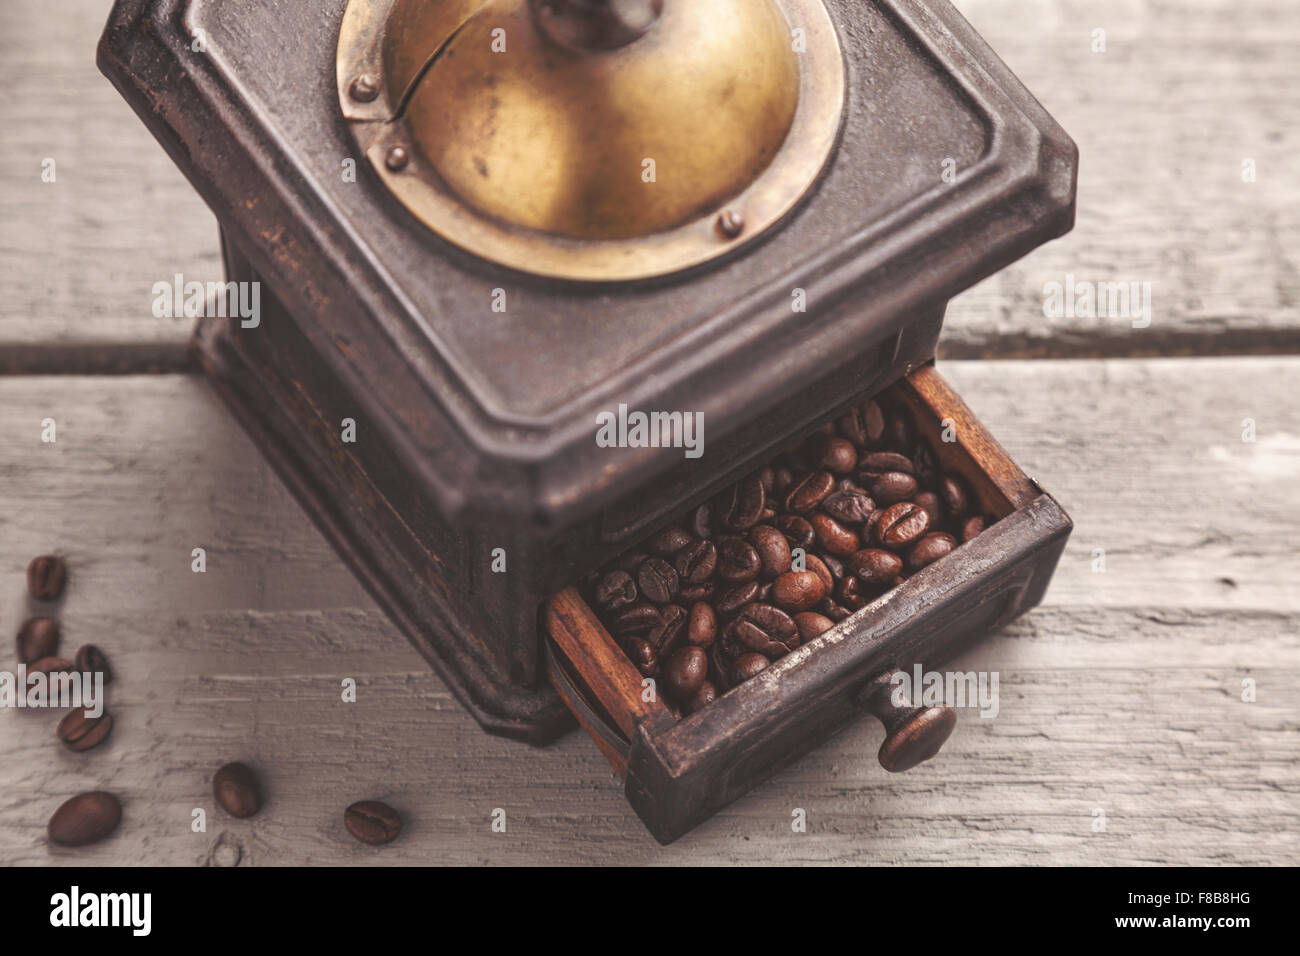 https://c8.alamy.com/comp/F8B8HG/vintage-coffee-blender-on-a-wooden-table-F8B8HG.jpg